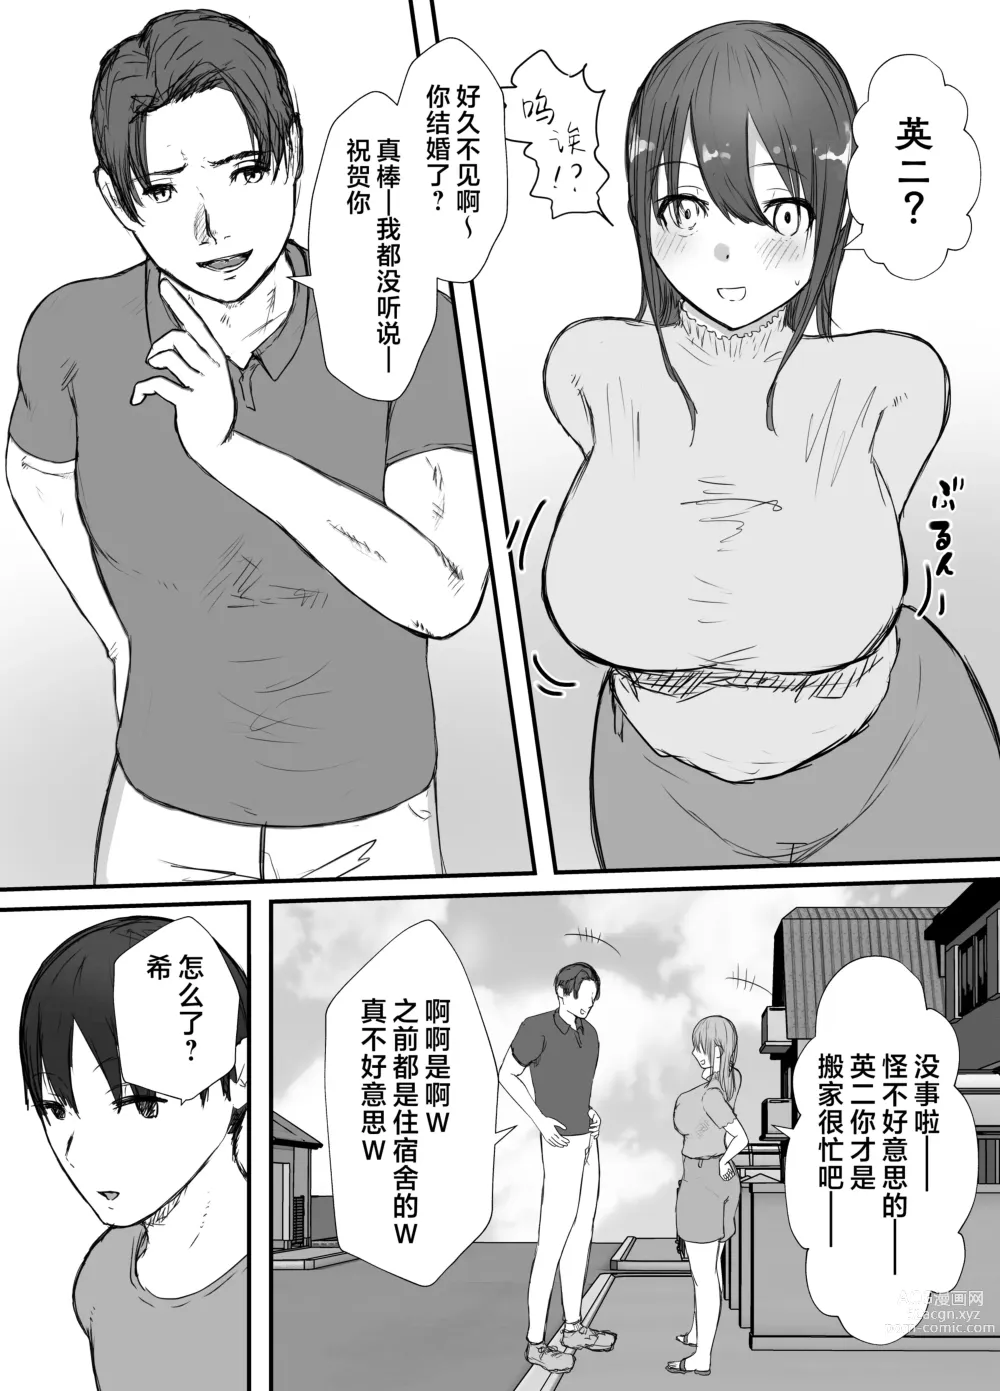 Page 8 of doujinshi 戴绿帽后悔似乎已经迟了哟?3